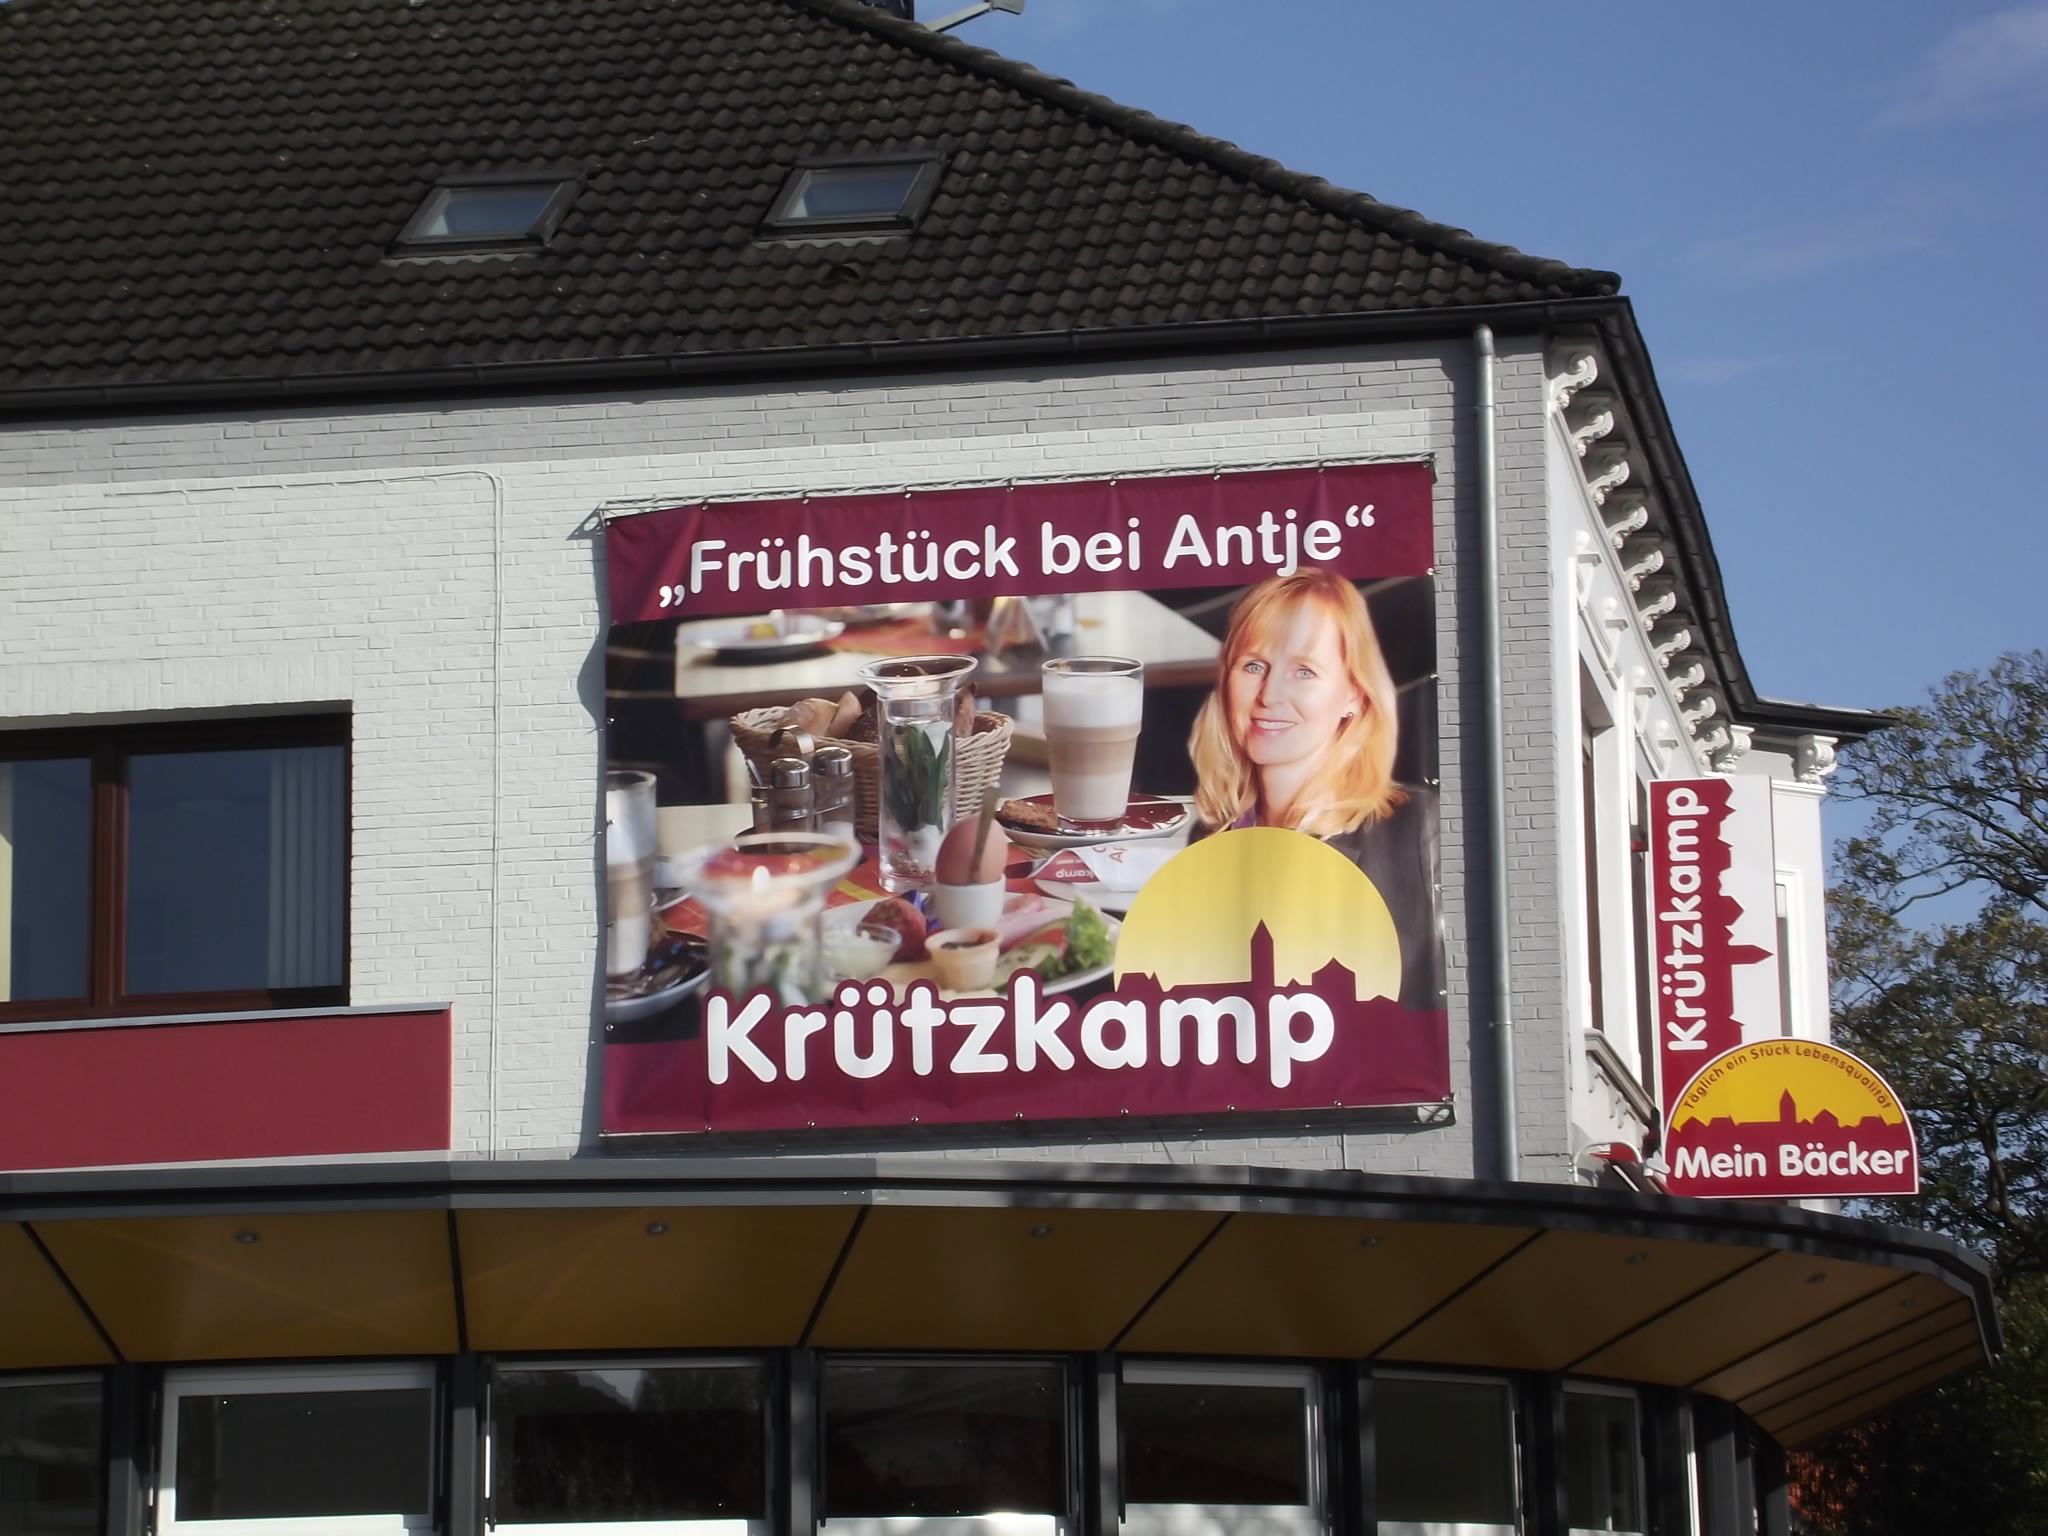 Bäckerei Konditorei Krützkamp in Delmenhorst - Werbeplakat an der Hauswand